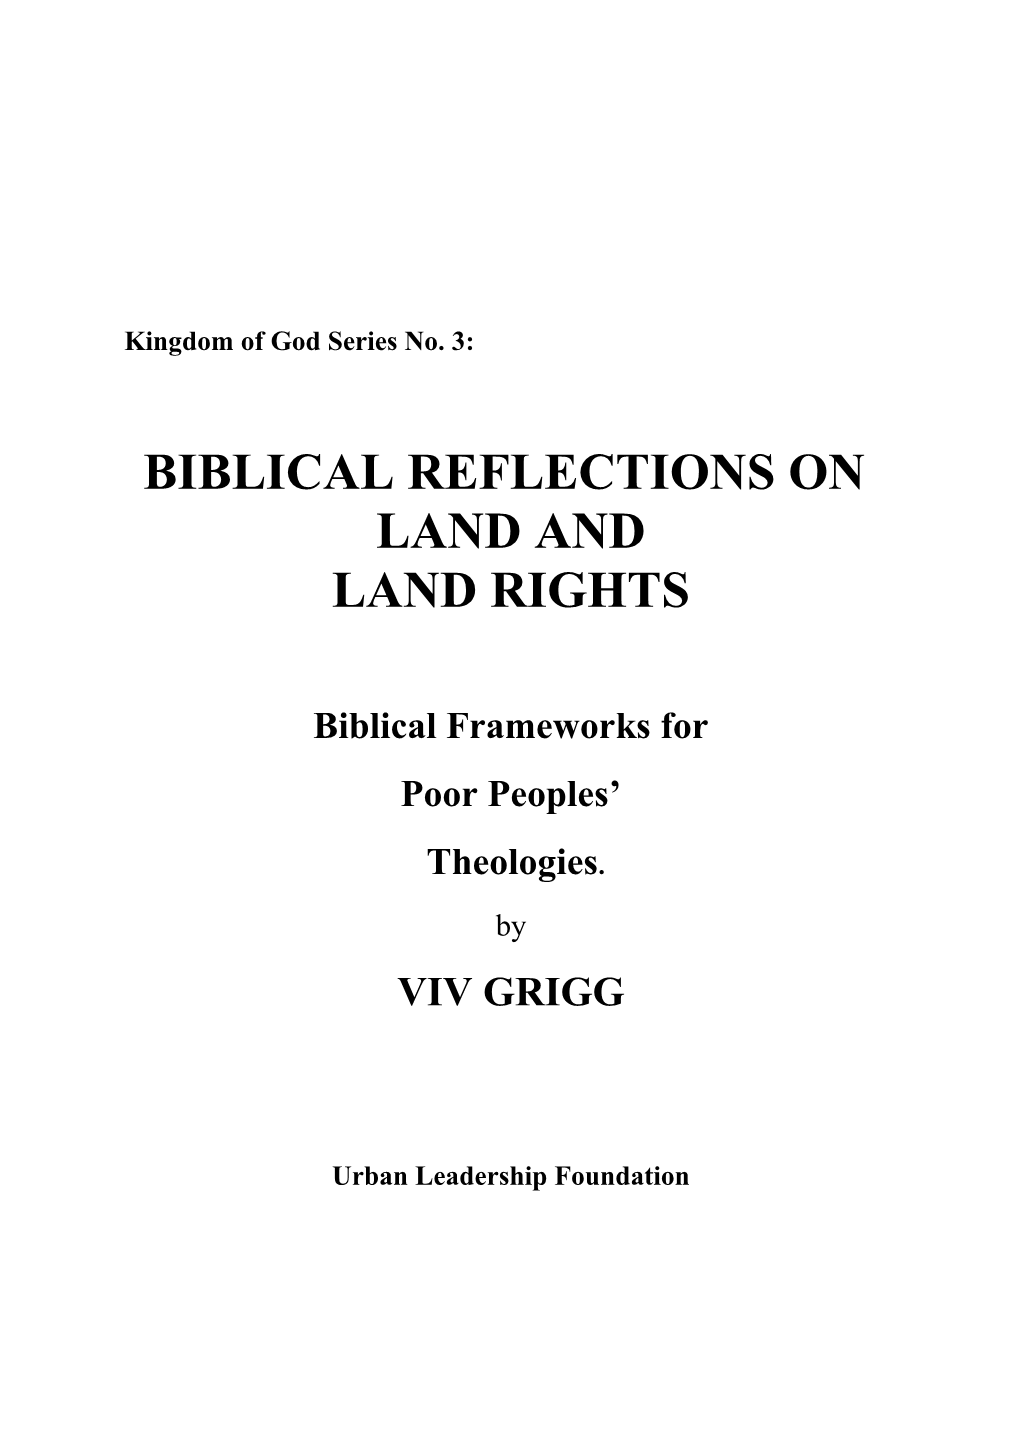 Biblical Principles of Land and Land Rightsviv Grigg